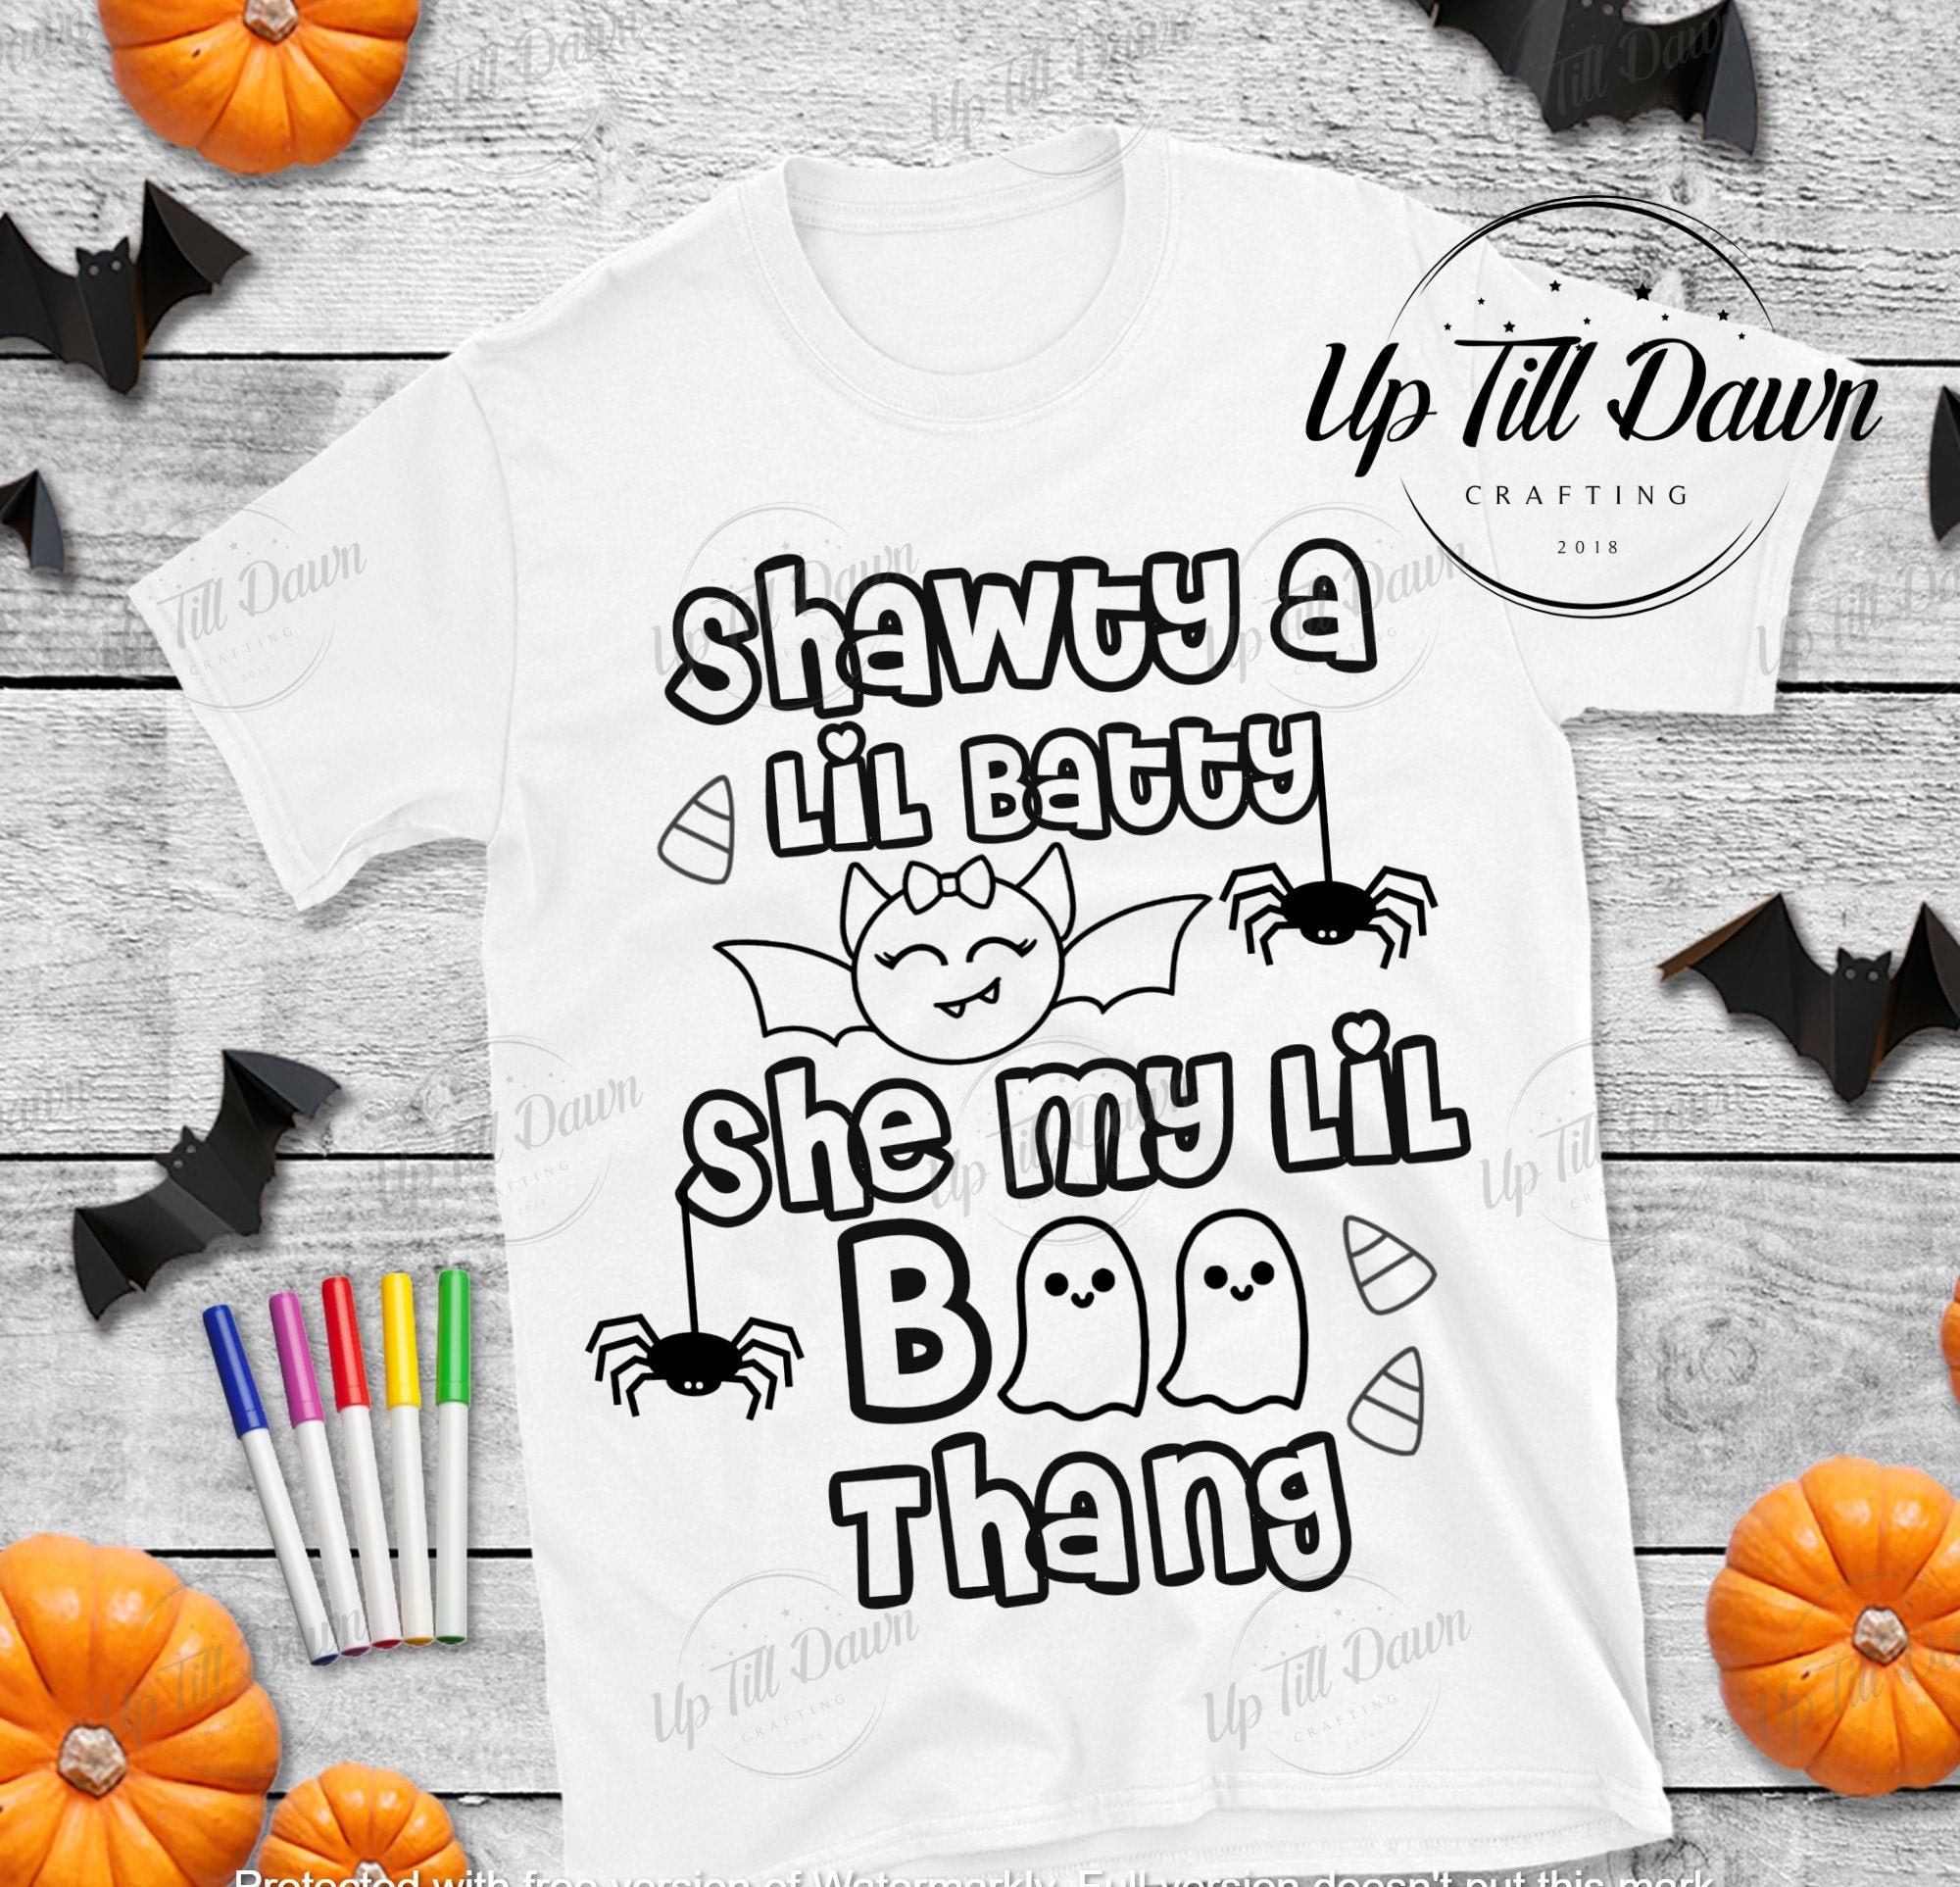 Shawty a Lil batty she my lil boo thang Halloween shirt, hoodie, guy tee